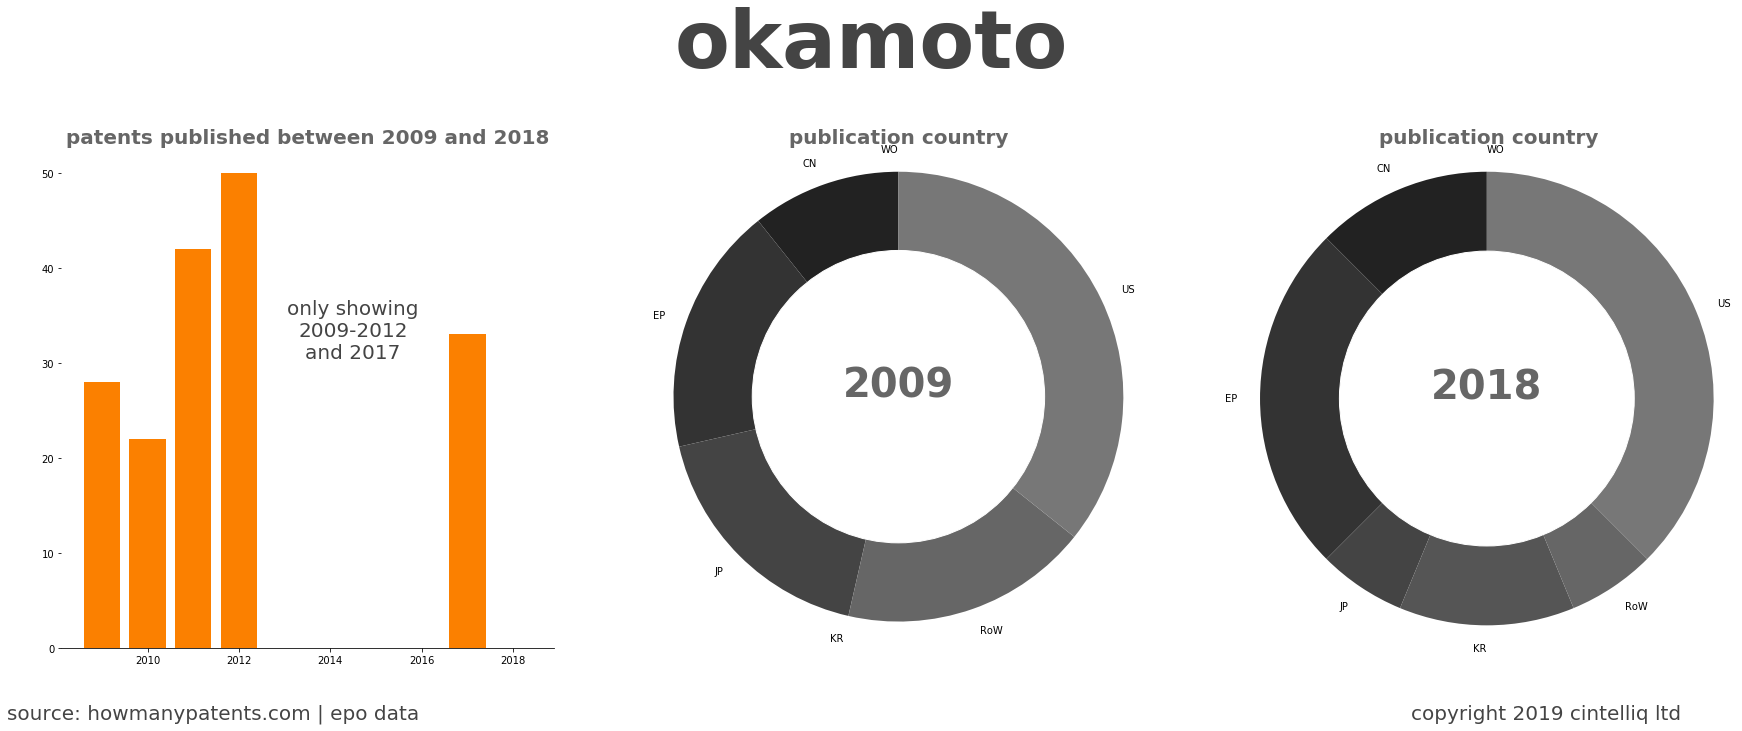 summary of patents for Okamoto